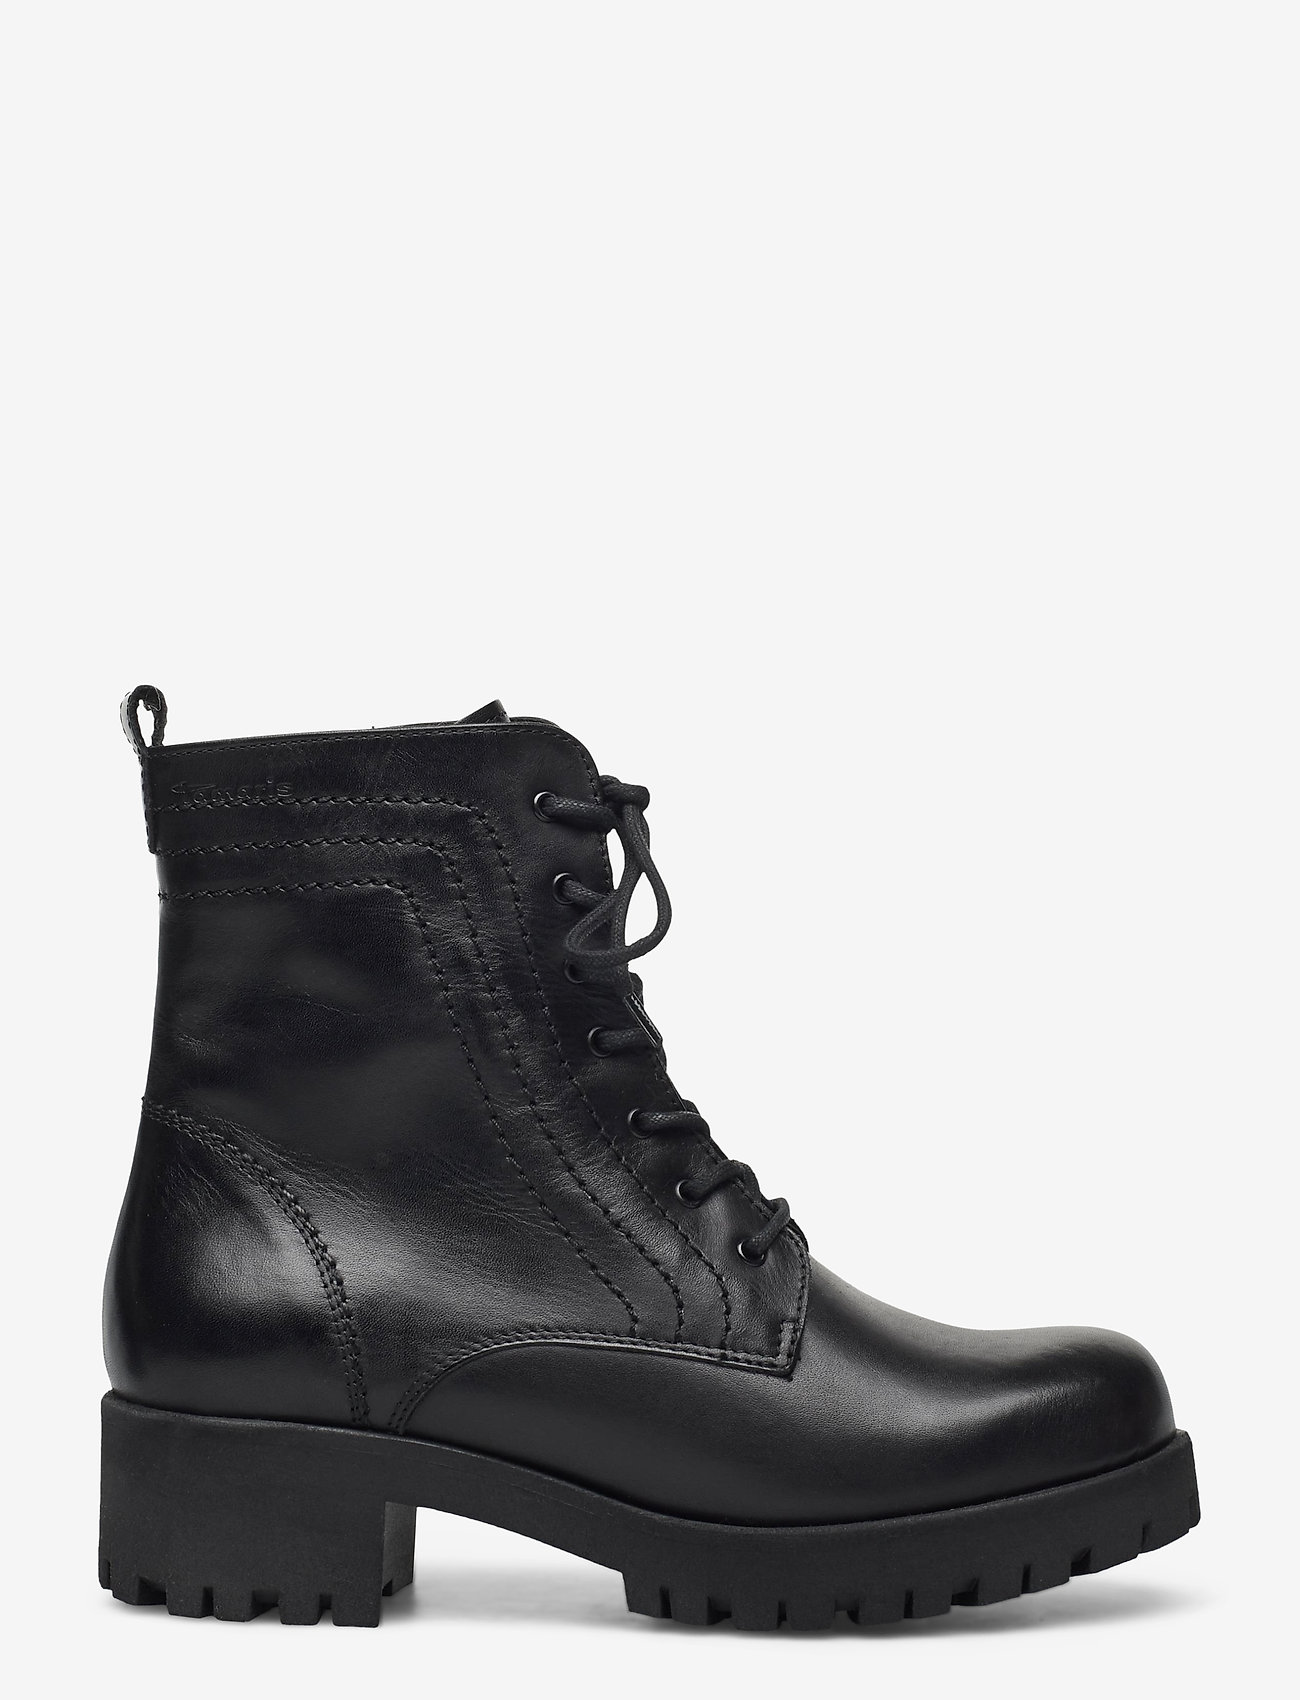 tamaris woms boots black